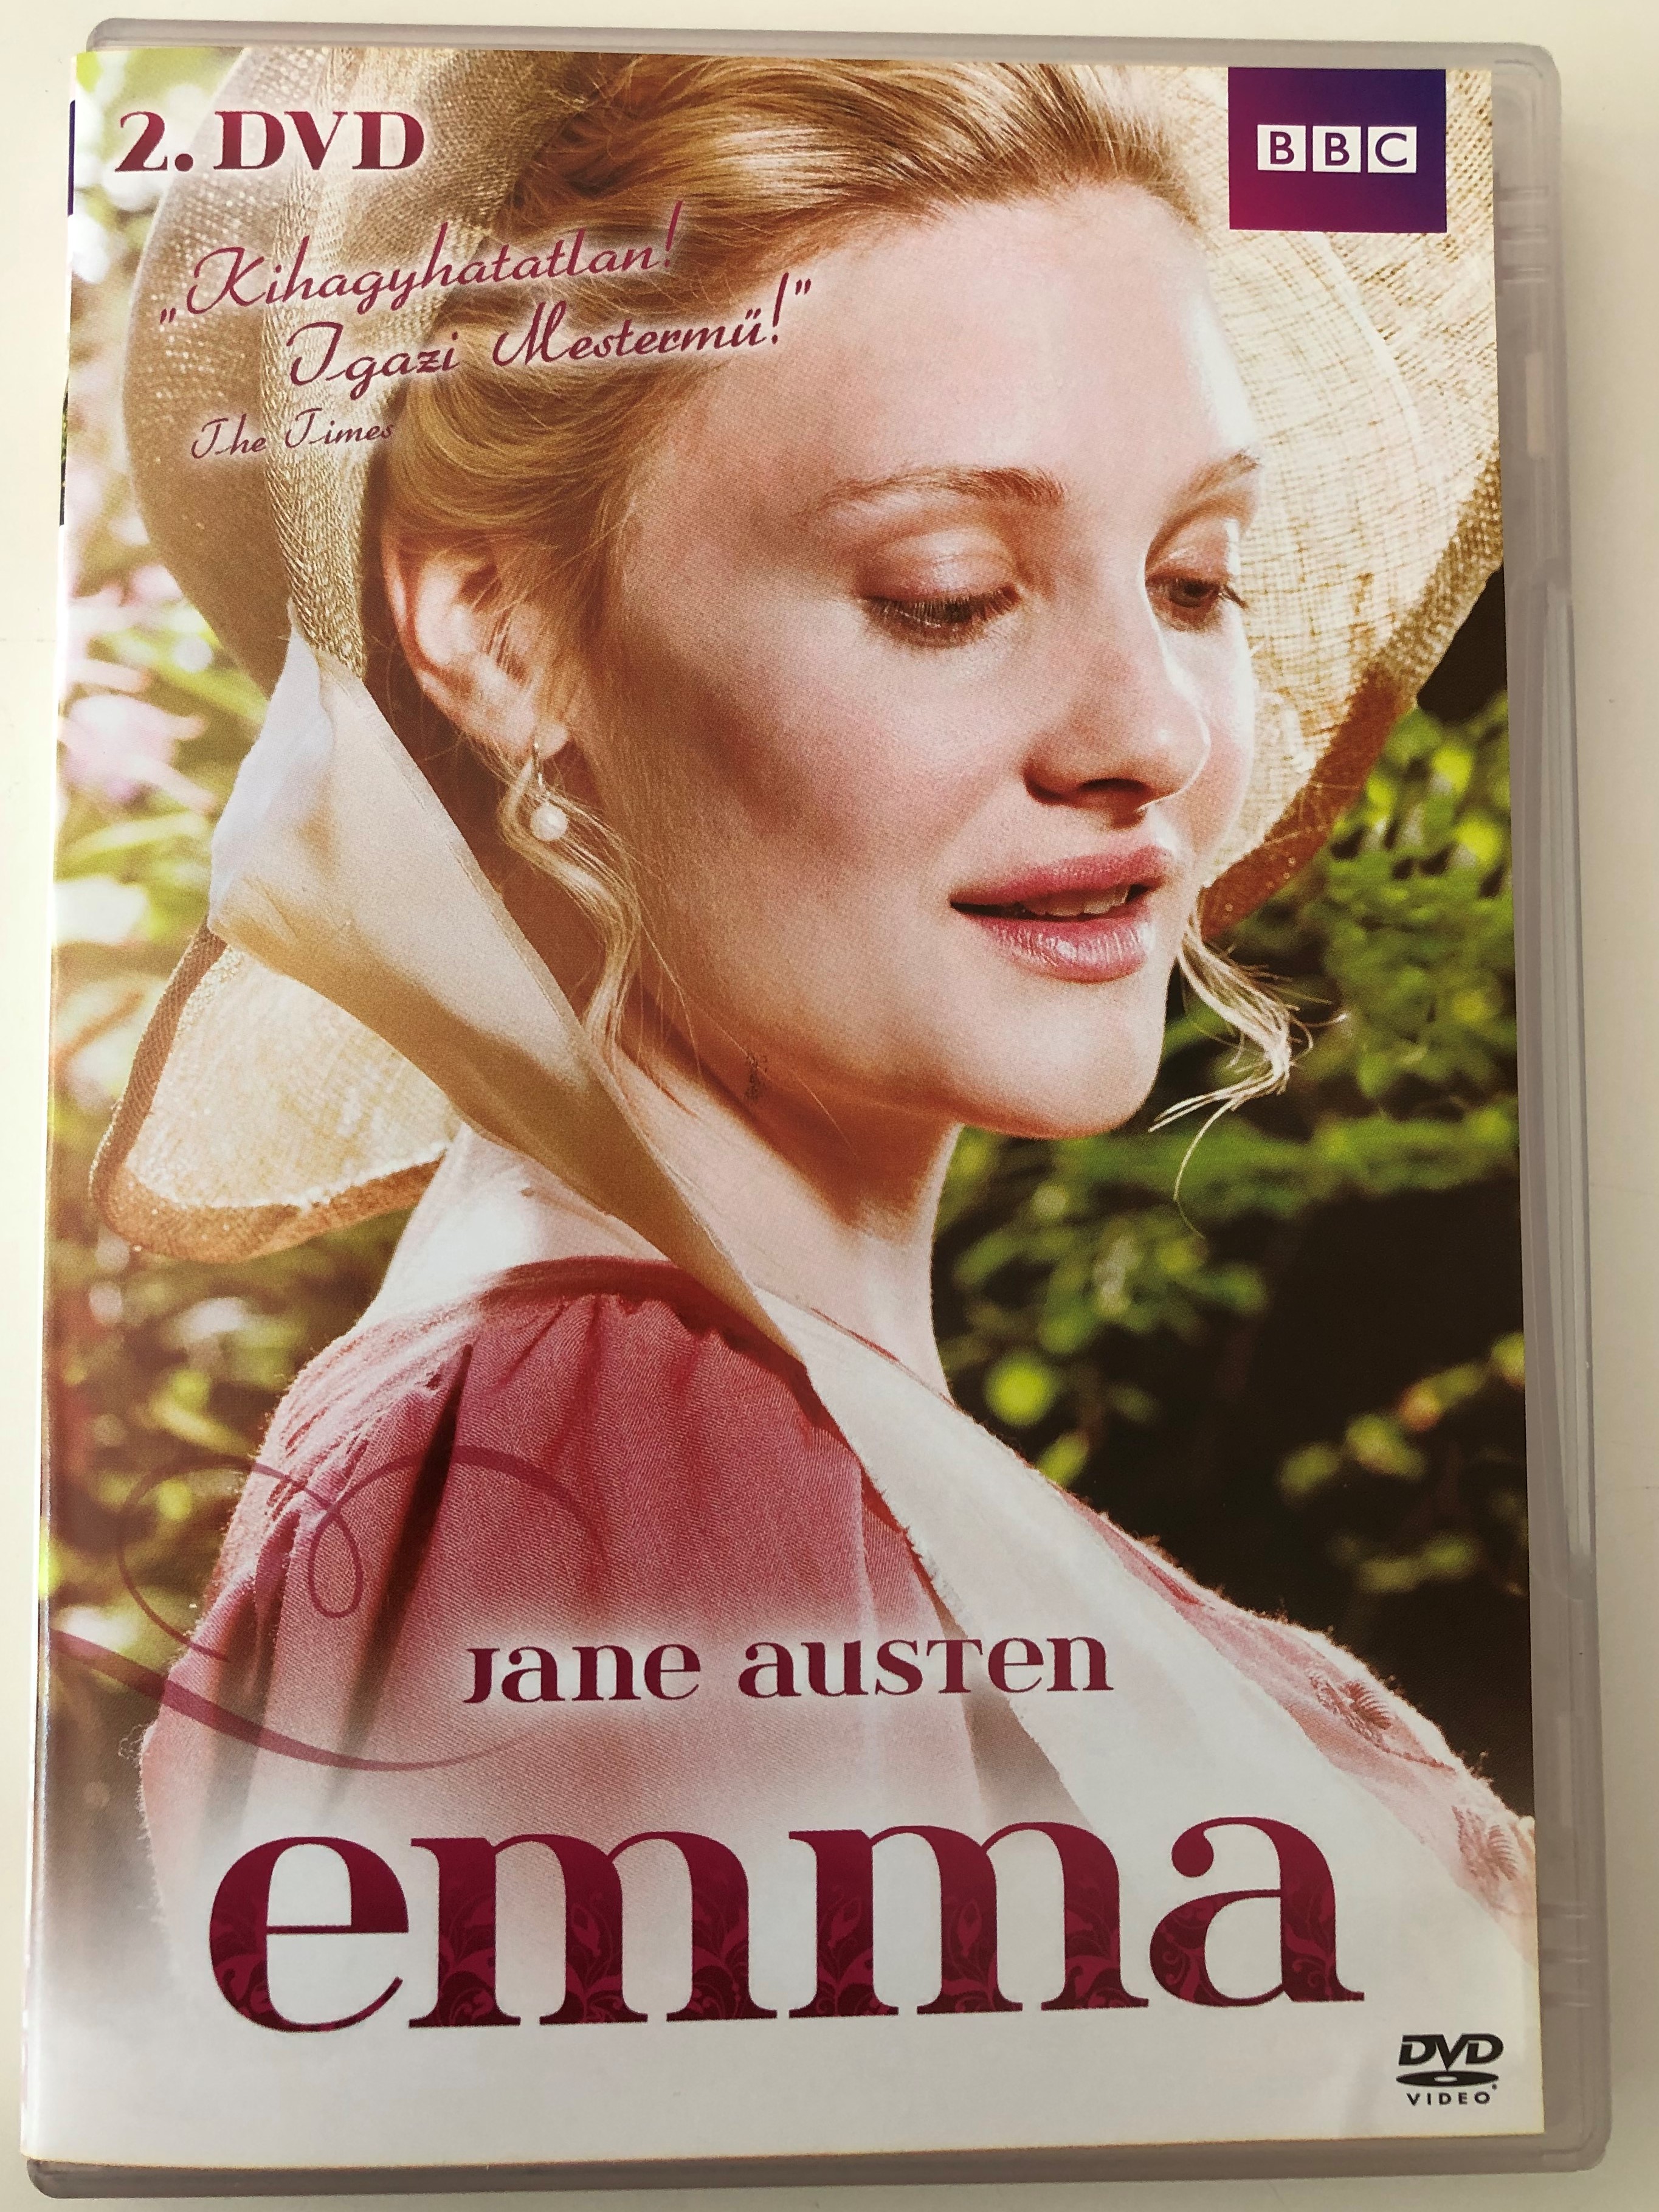 Jane Austen's Emma DVD Part 2. / BBC mini-series / Directed by Jim O'Hanlon  / Starring: Romola Garai, Jonny Lee Miller, Michael Gambon, Tamsin Greig -  bibleinmylanguage